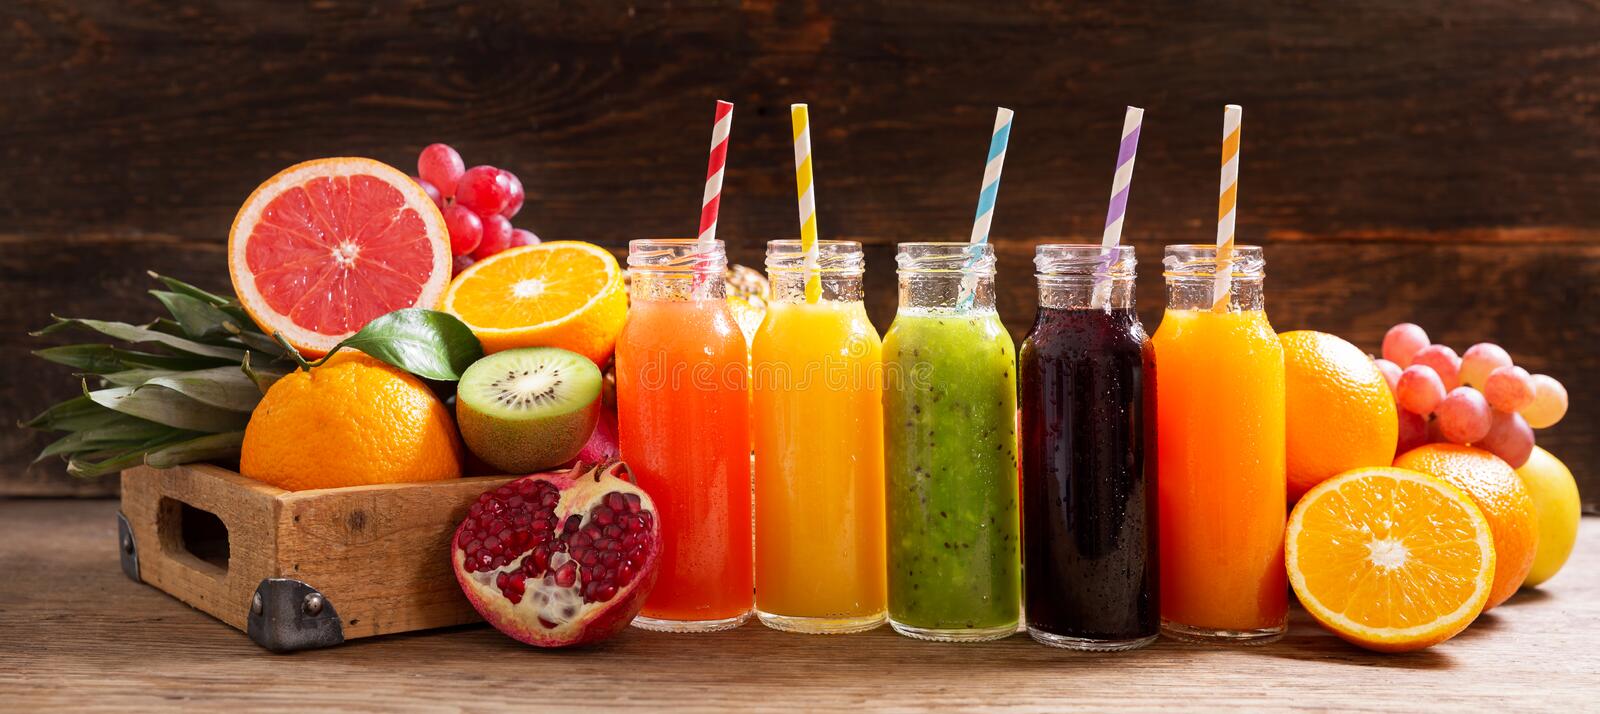 fresh-fruit-juices